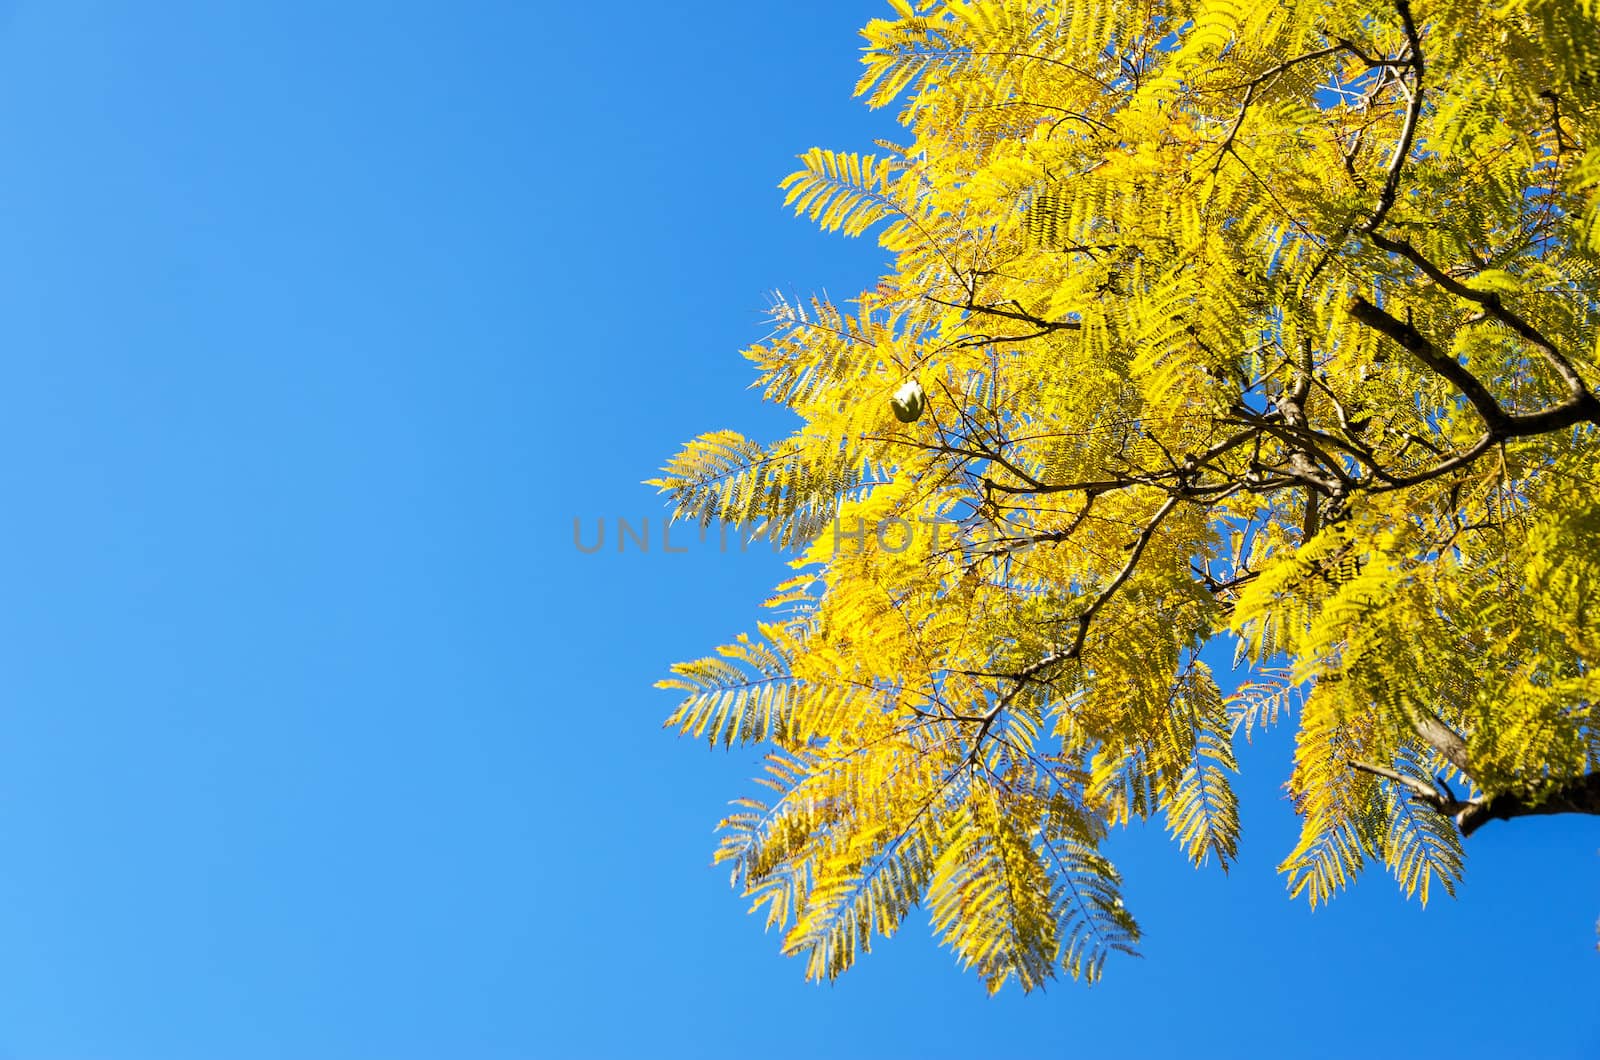 Yellowish Leaves by jkraft5